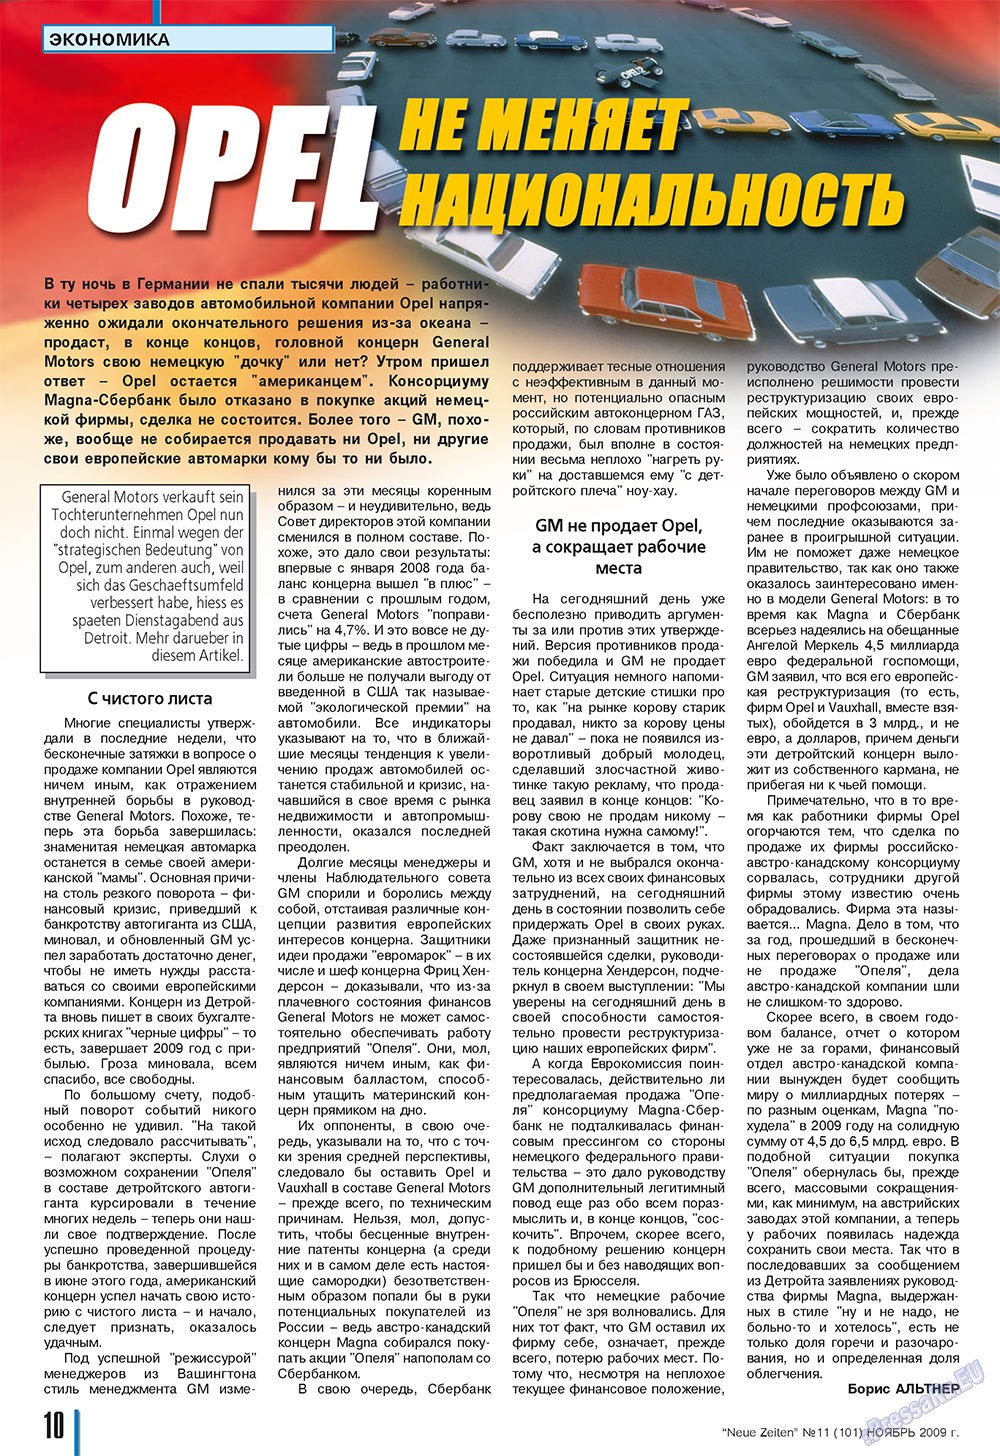 Neue Zeiten (журнал). 2009 год, номер 11, стр. 10